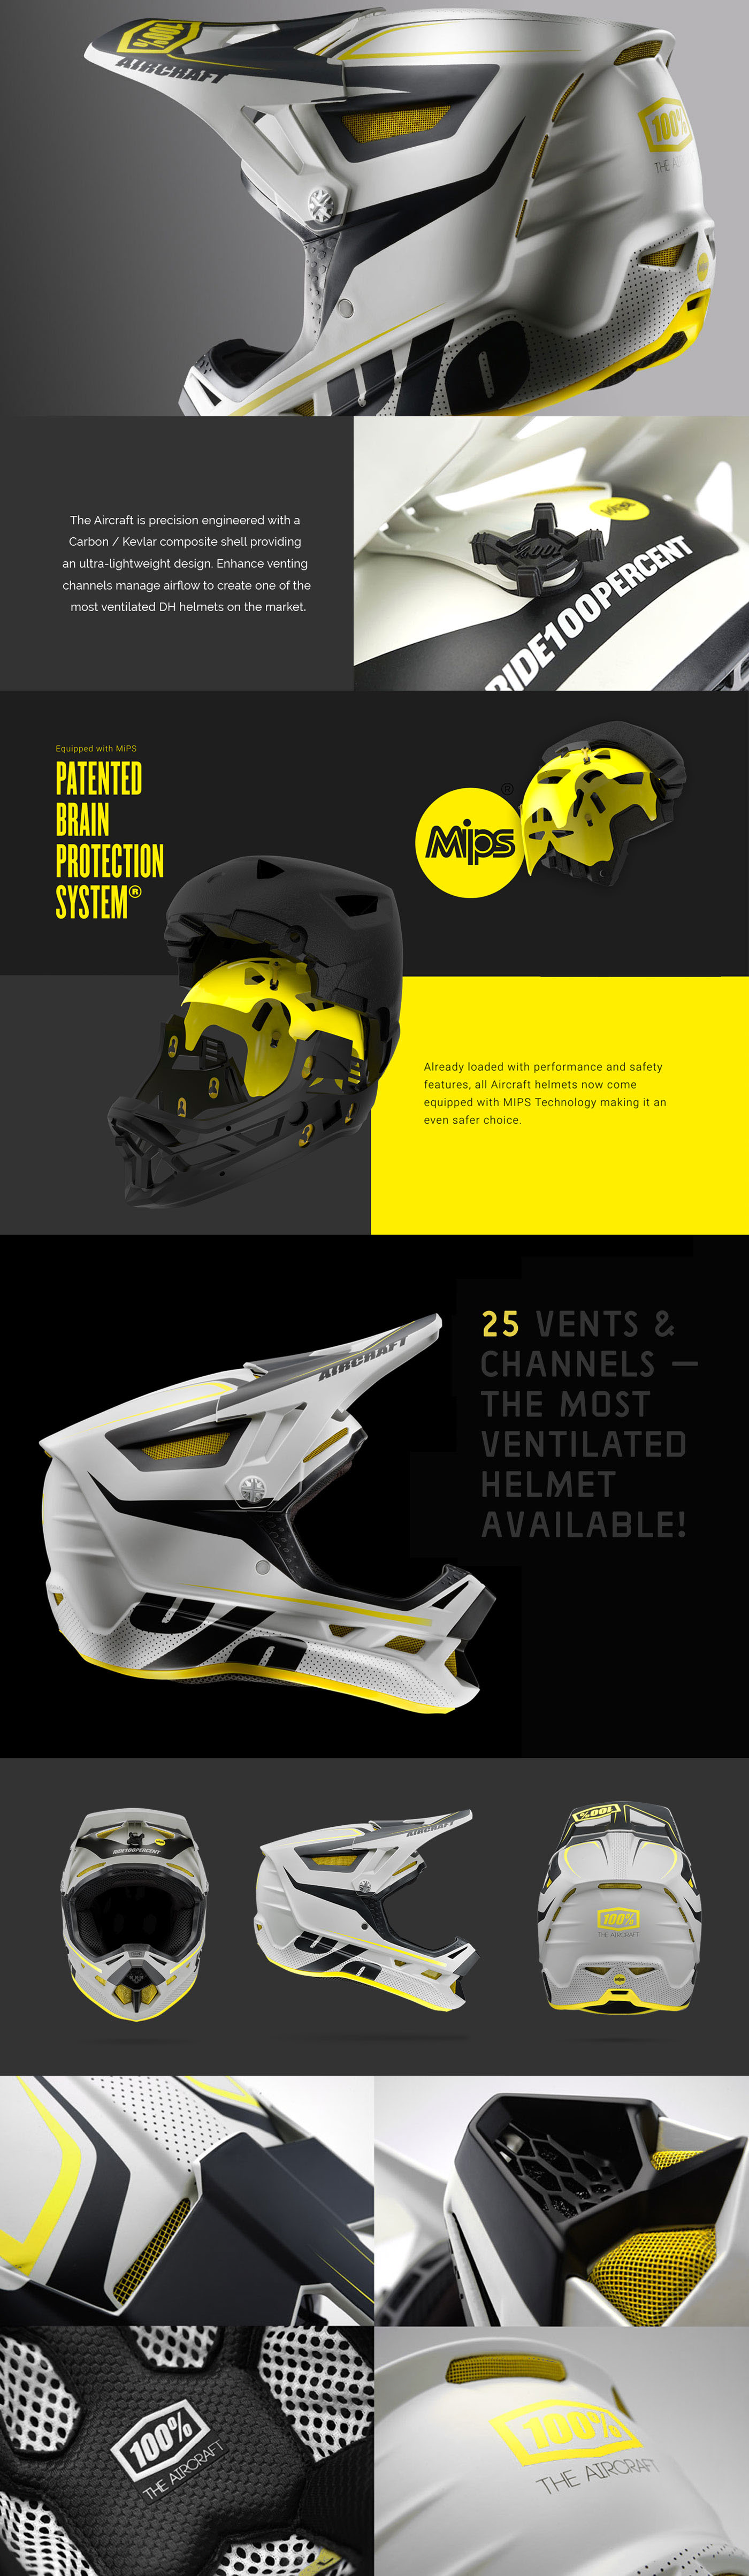 Downhill Helmet Helmet mountain biking MTB Protective Gear Riding Gear 100% Racing Bike safety down hill